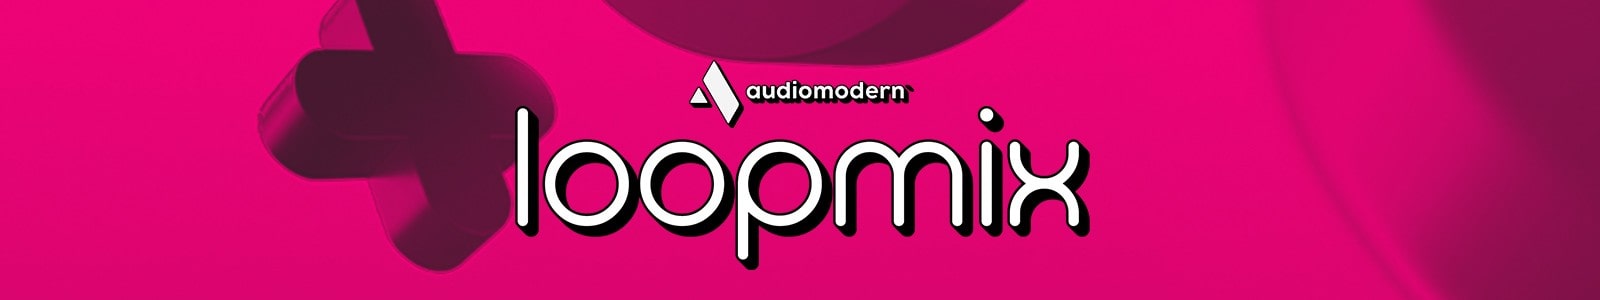 Audiomodern LOOPMIX